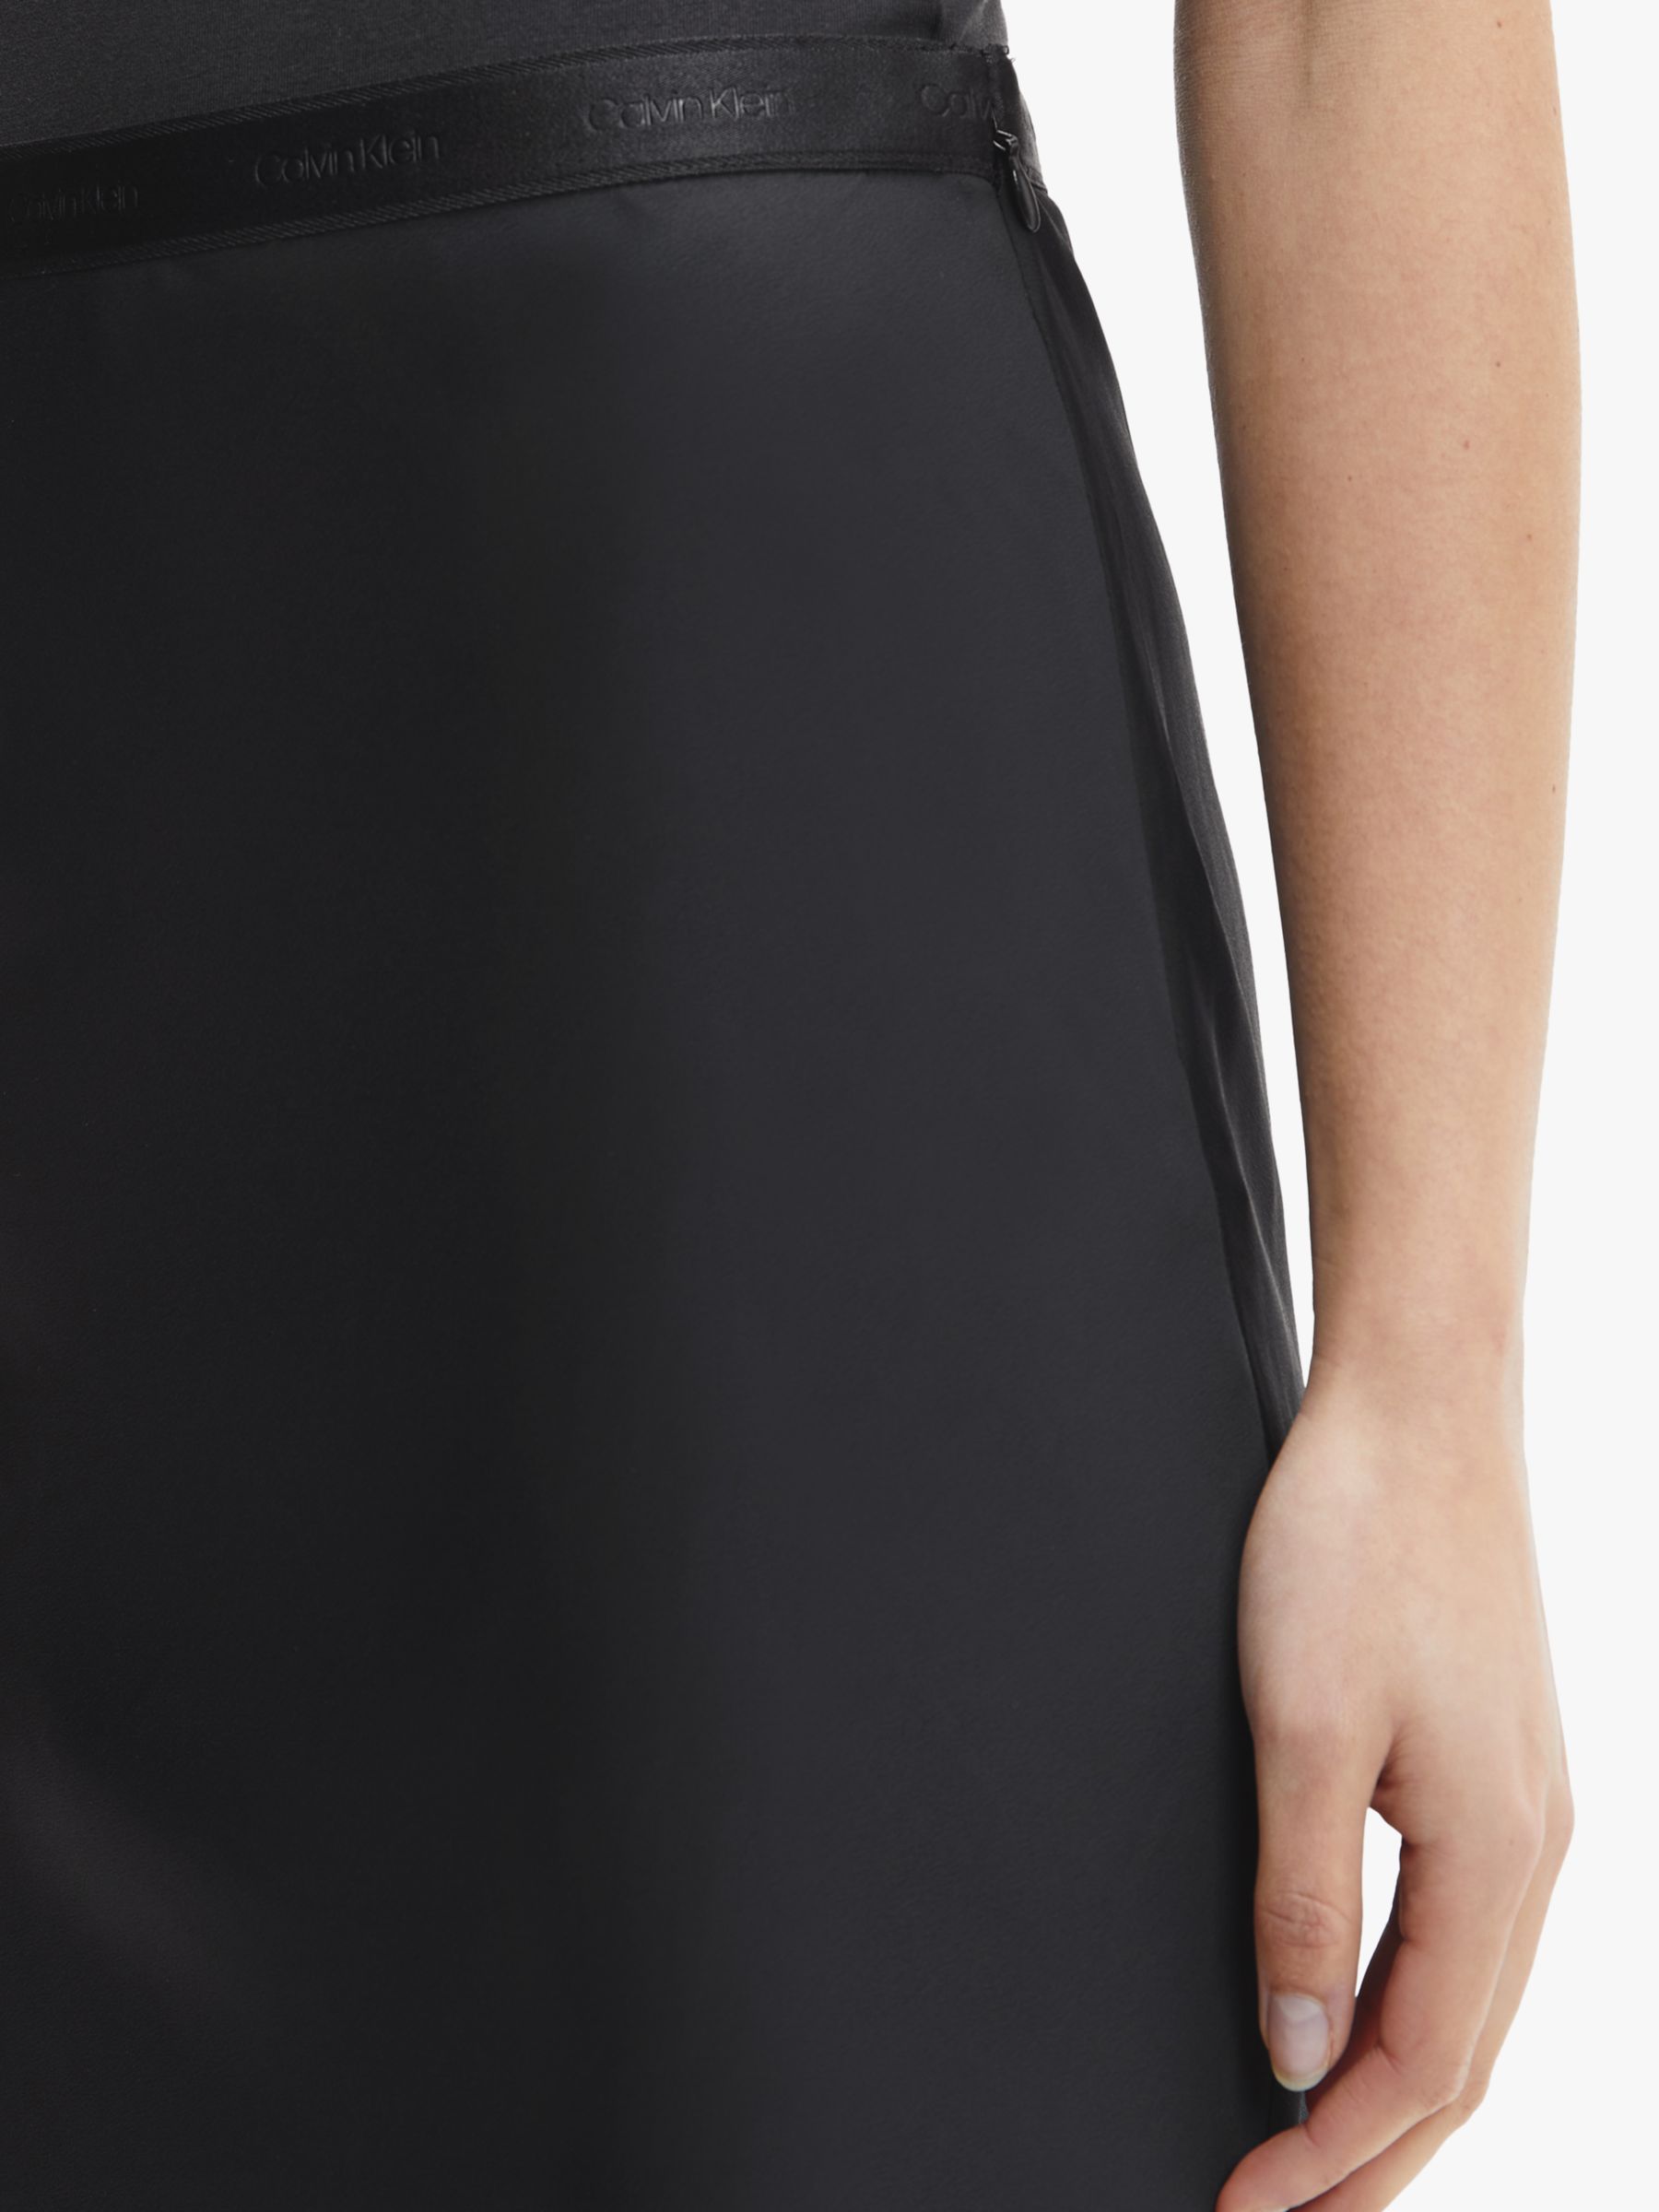 Black at Lewis Calvin Cut Klein John Partners Skirt, Midi Bias &